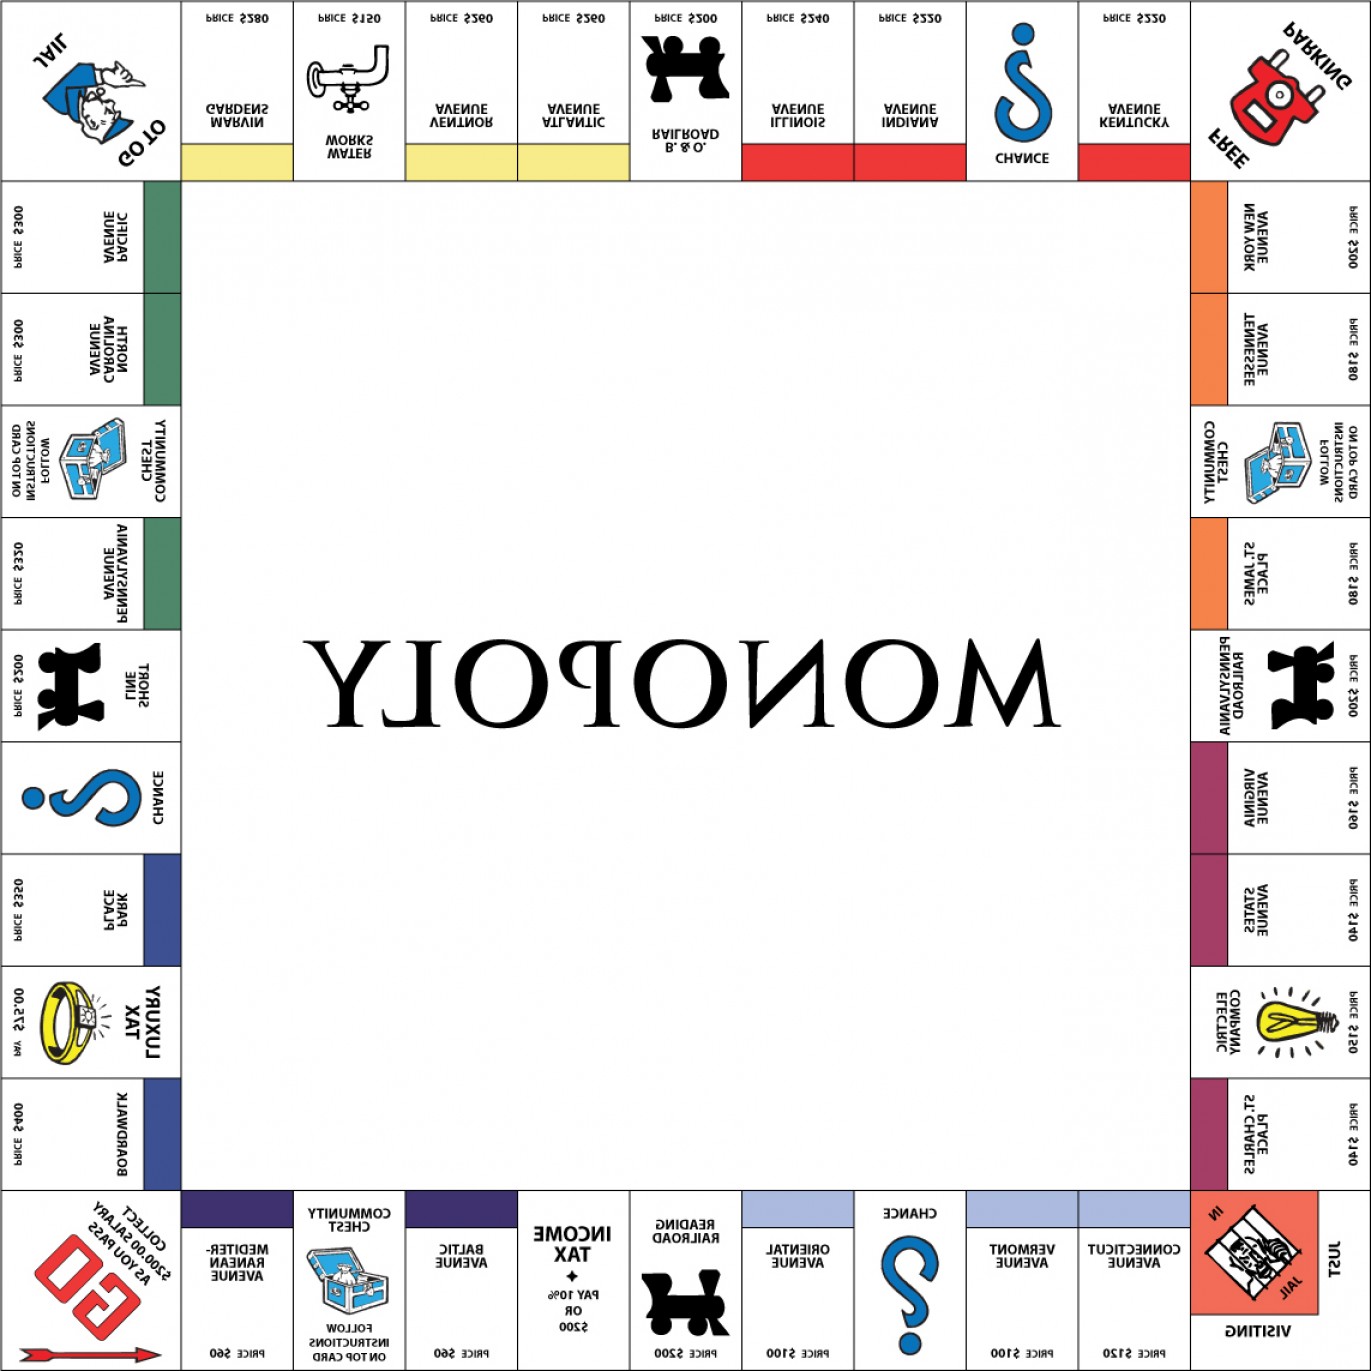 Original monopoly board monopoly board symbols - honnow